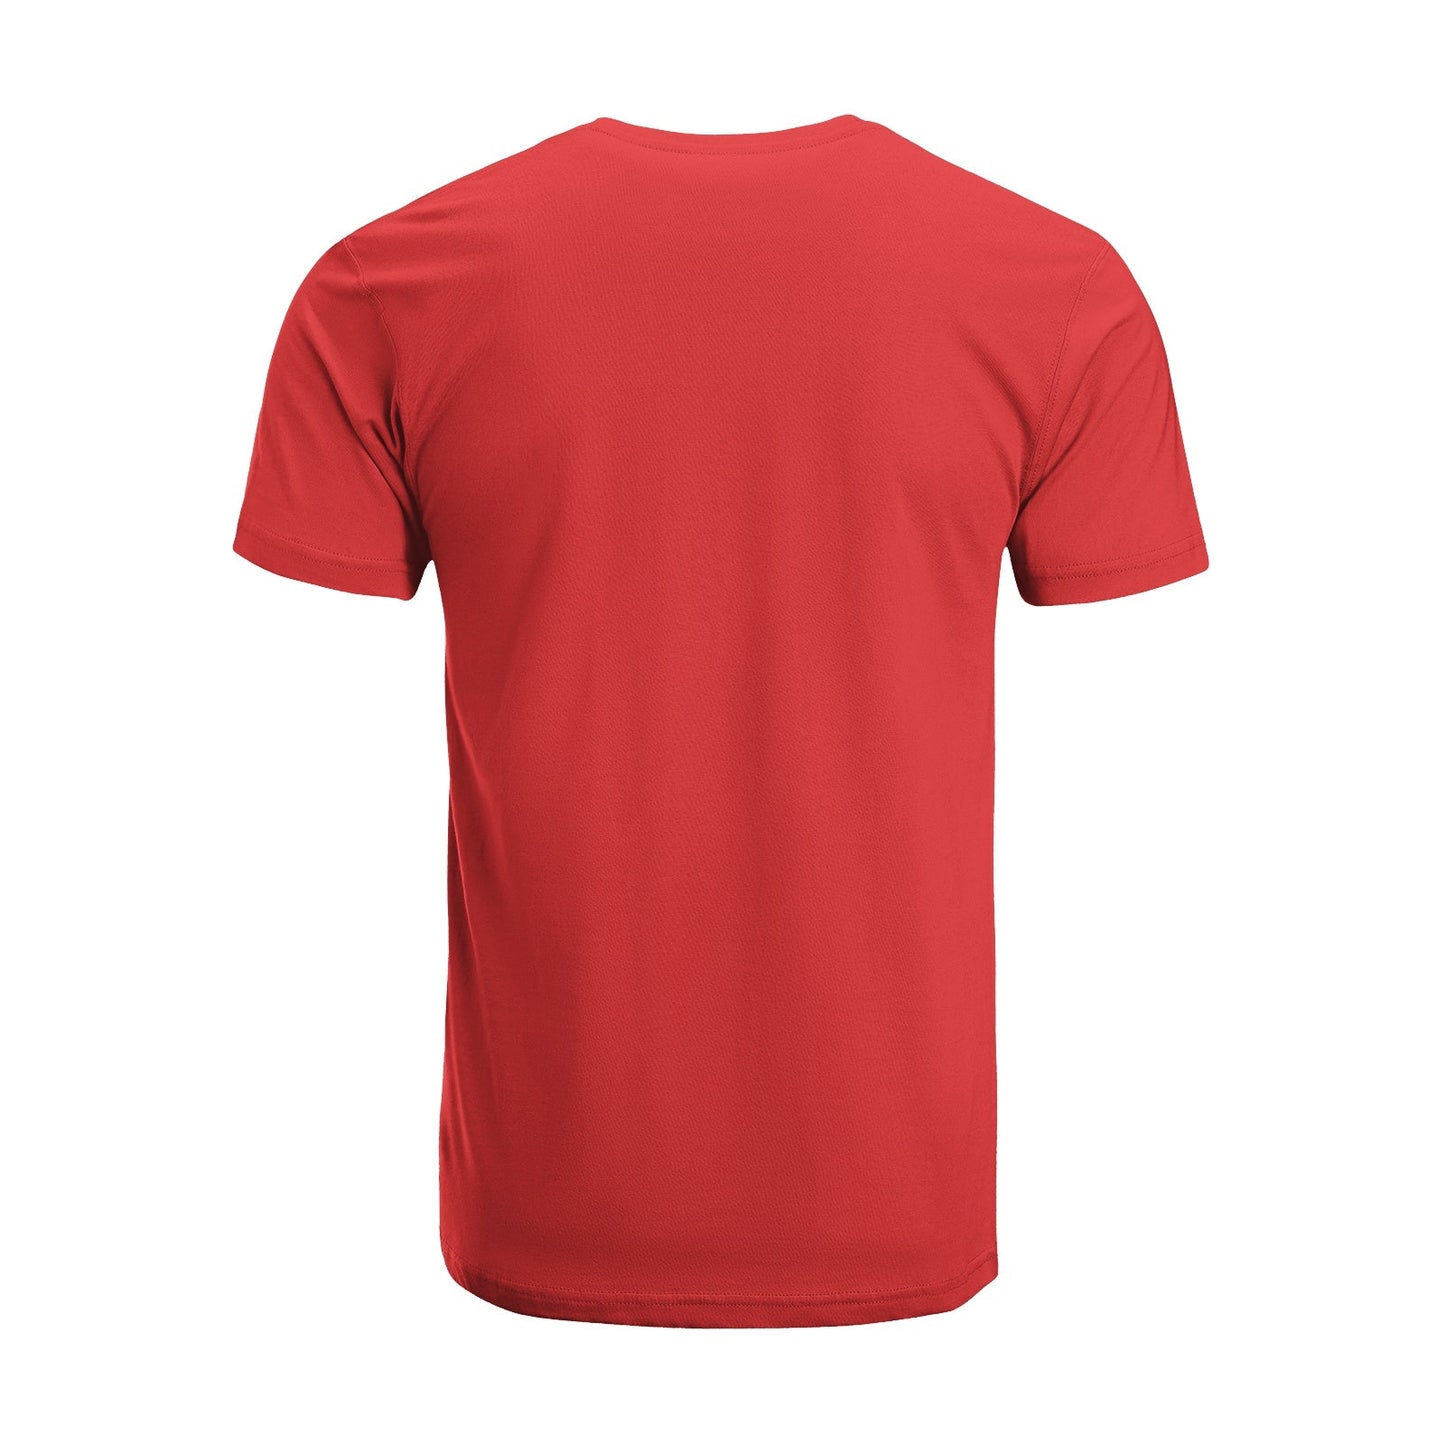 Unisex Short Sleeve Crew Neck Cotton Jersey T-Shirt DOG 44